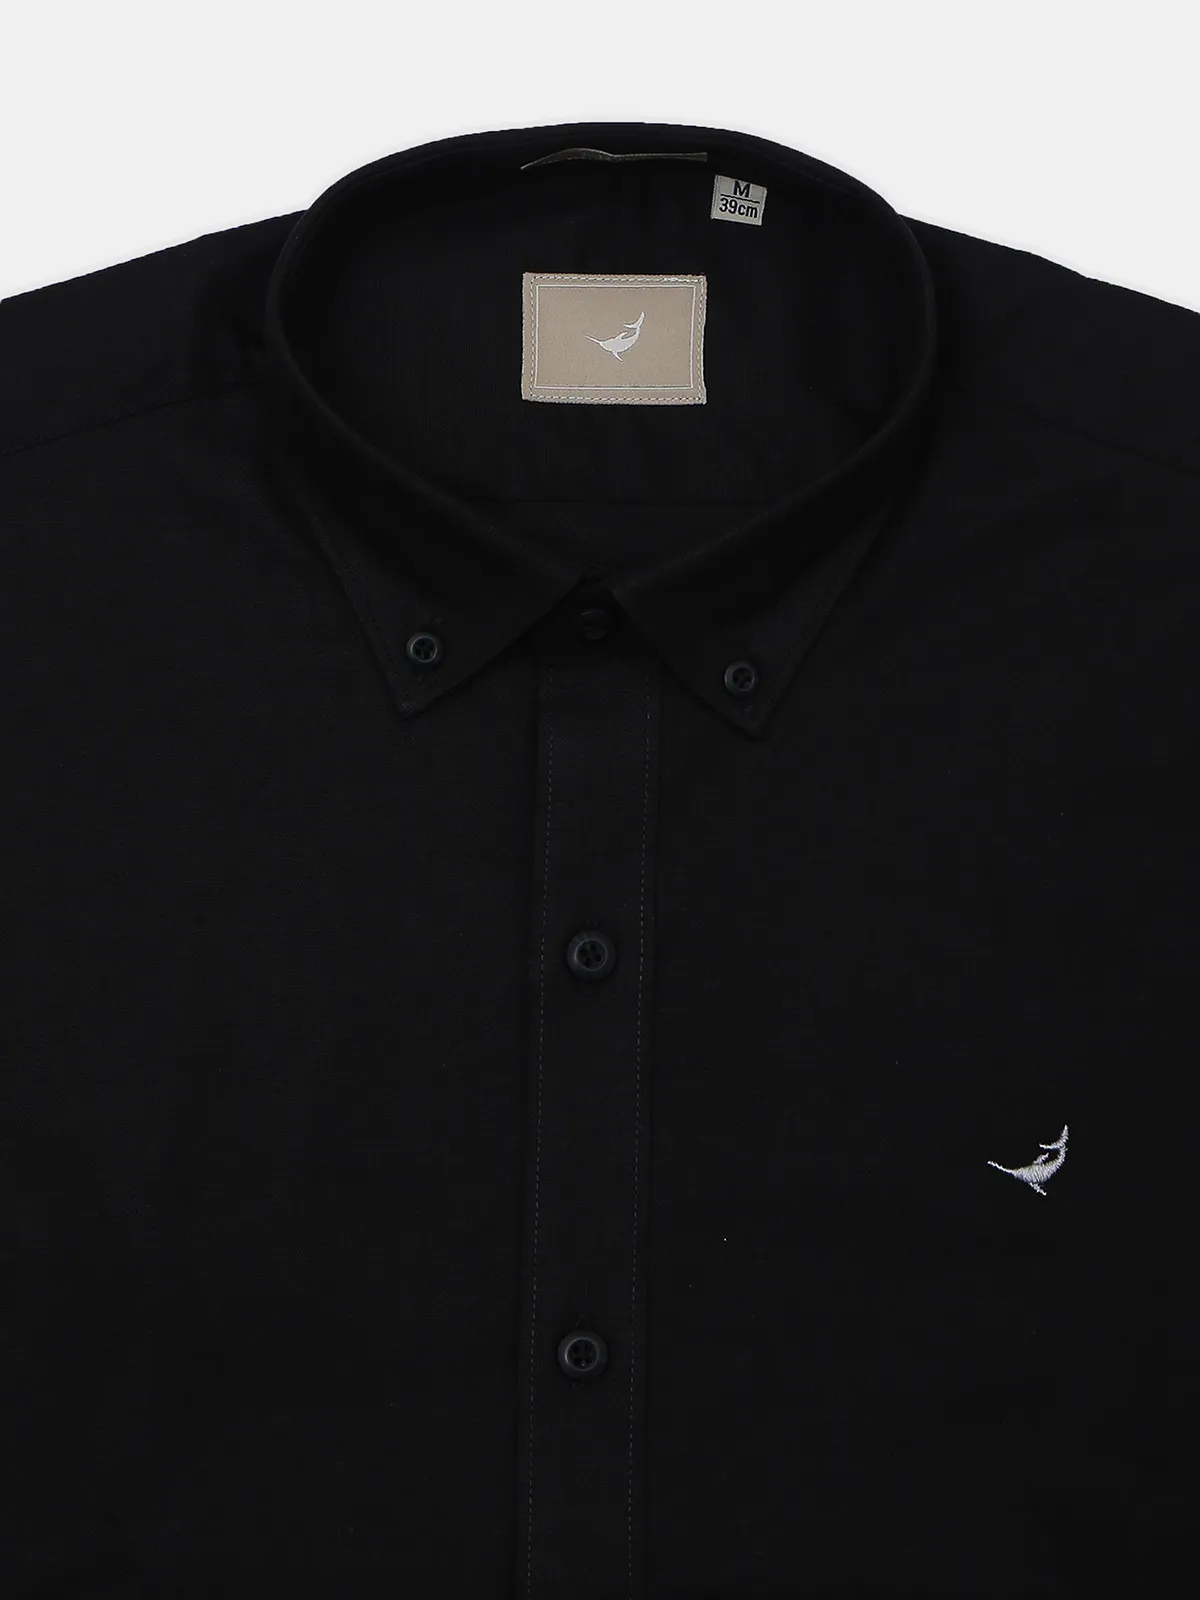 Frio slim fit black cotton casual shirt for men